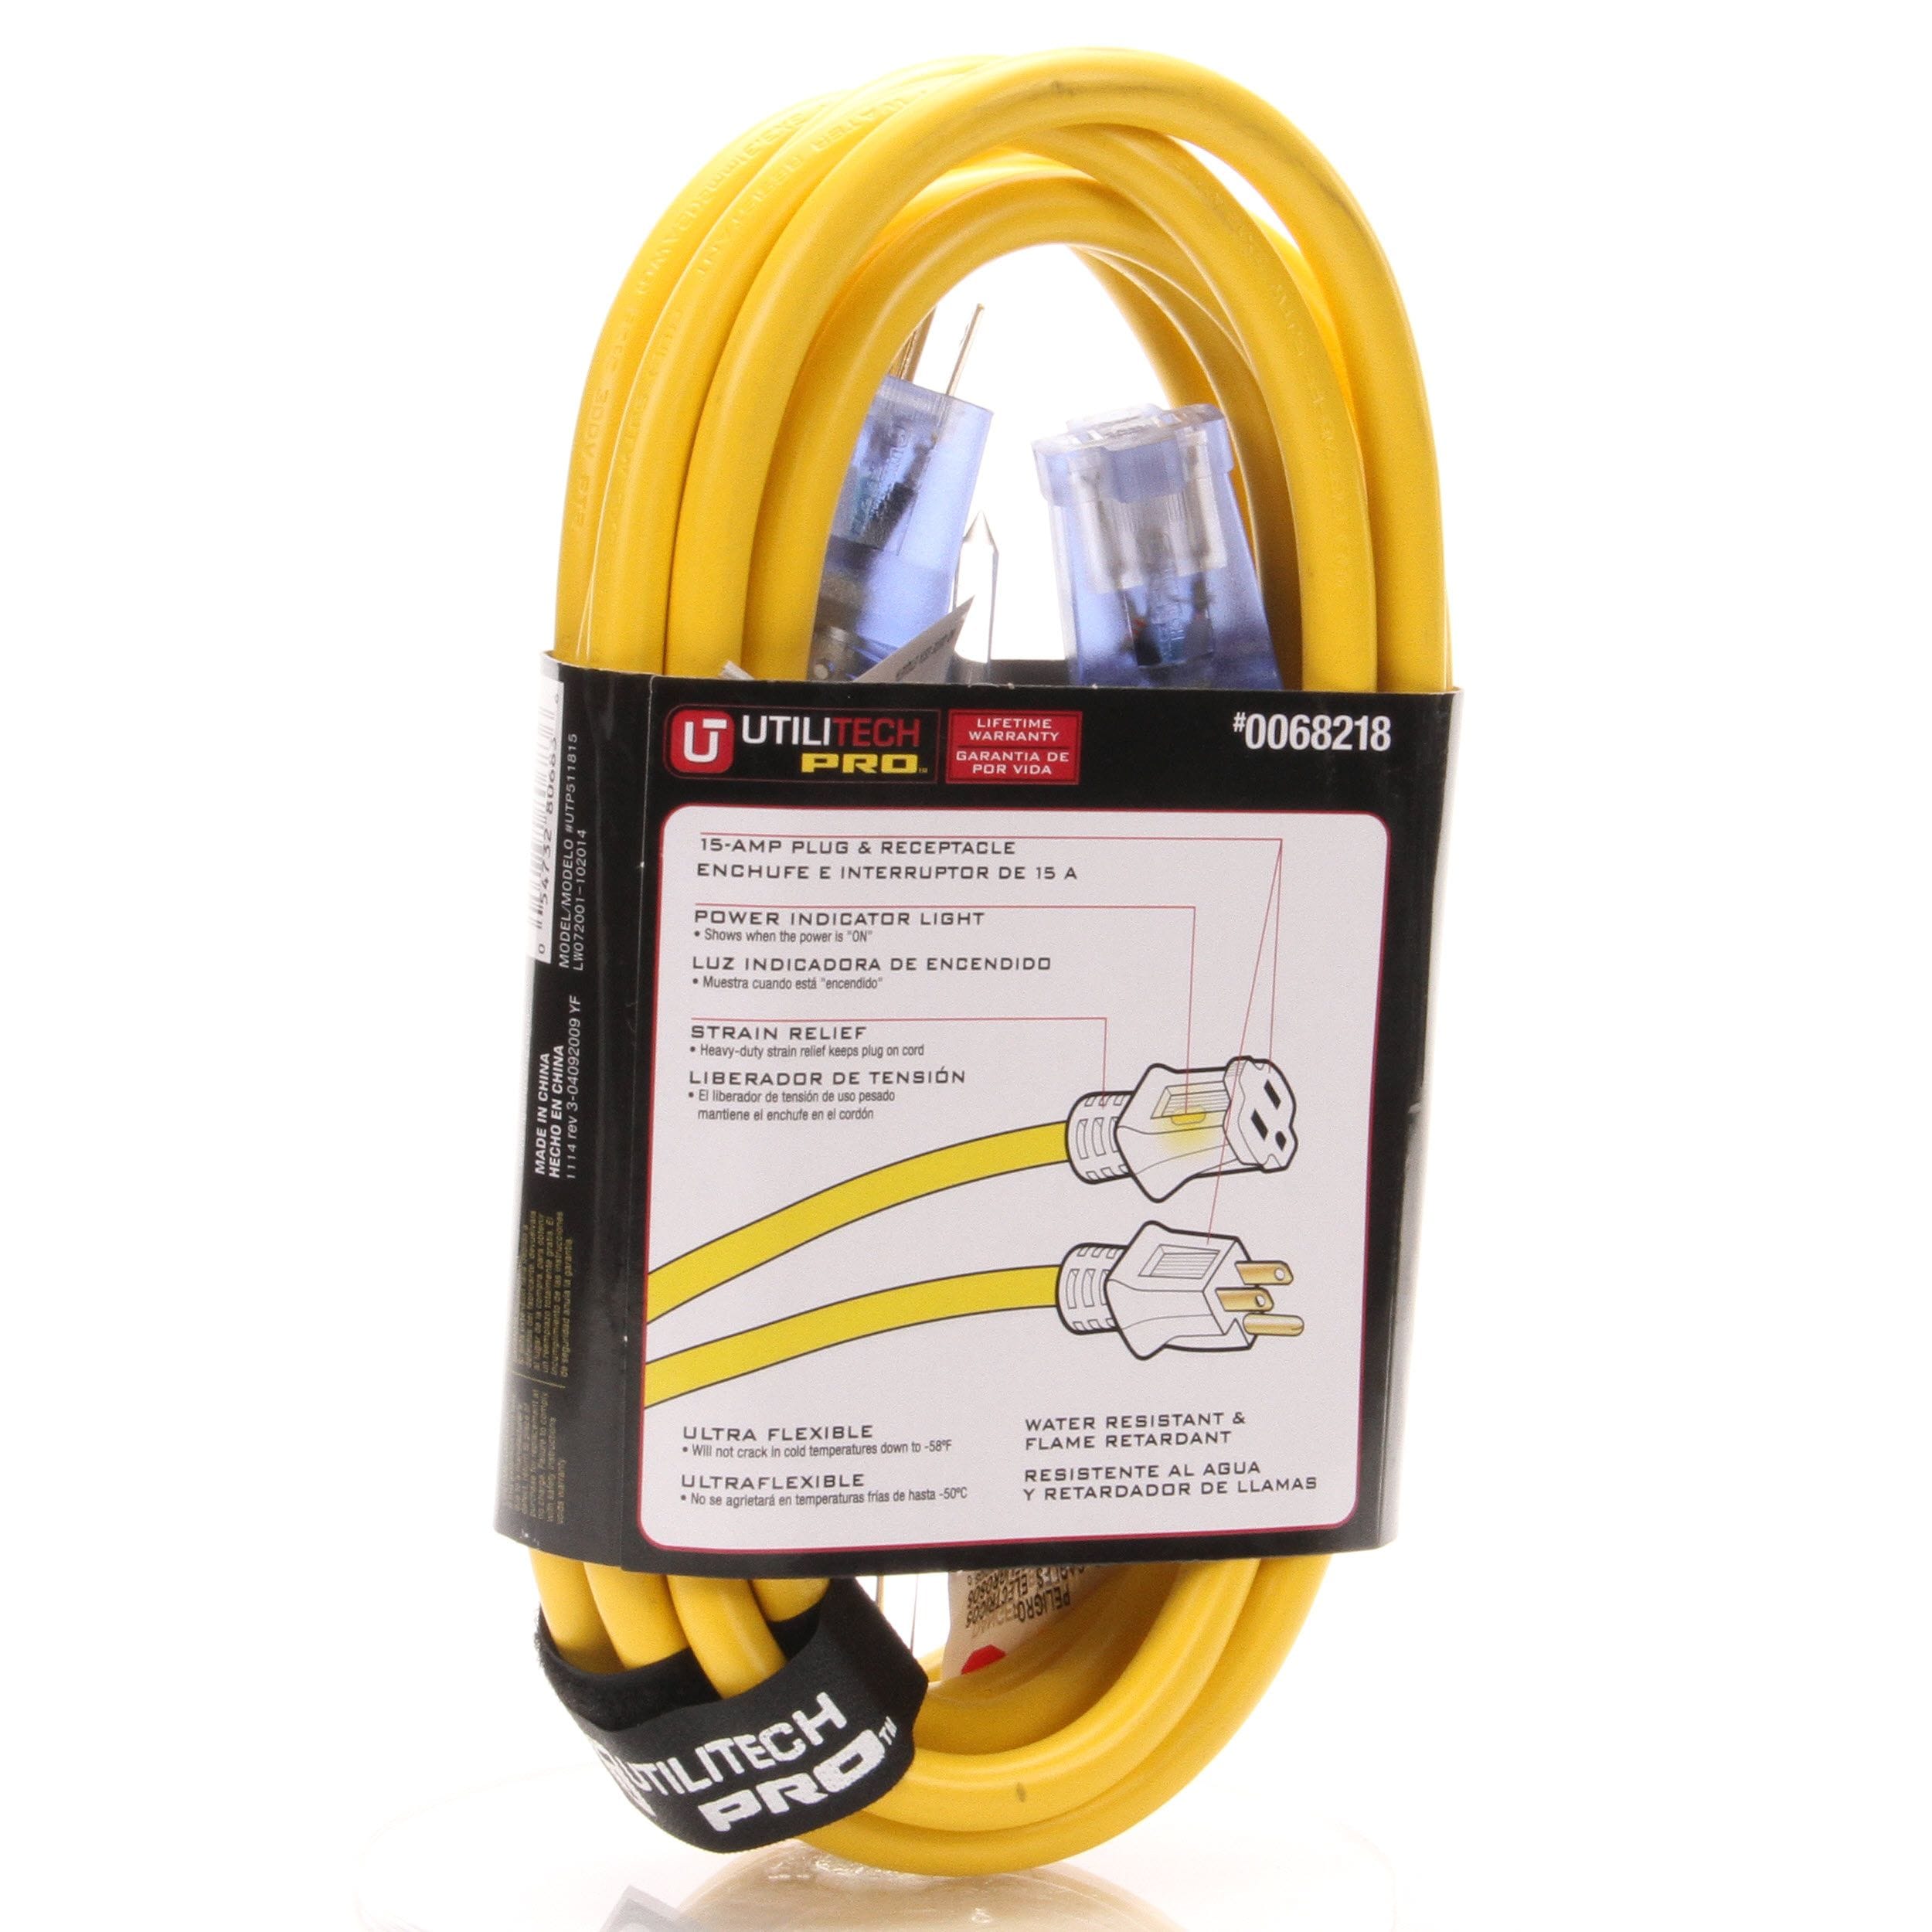 Utilitech 3 prong plug 3 wire #0467149 15a-125v 2-pole 